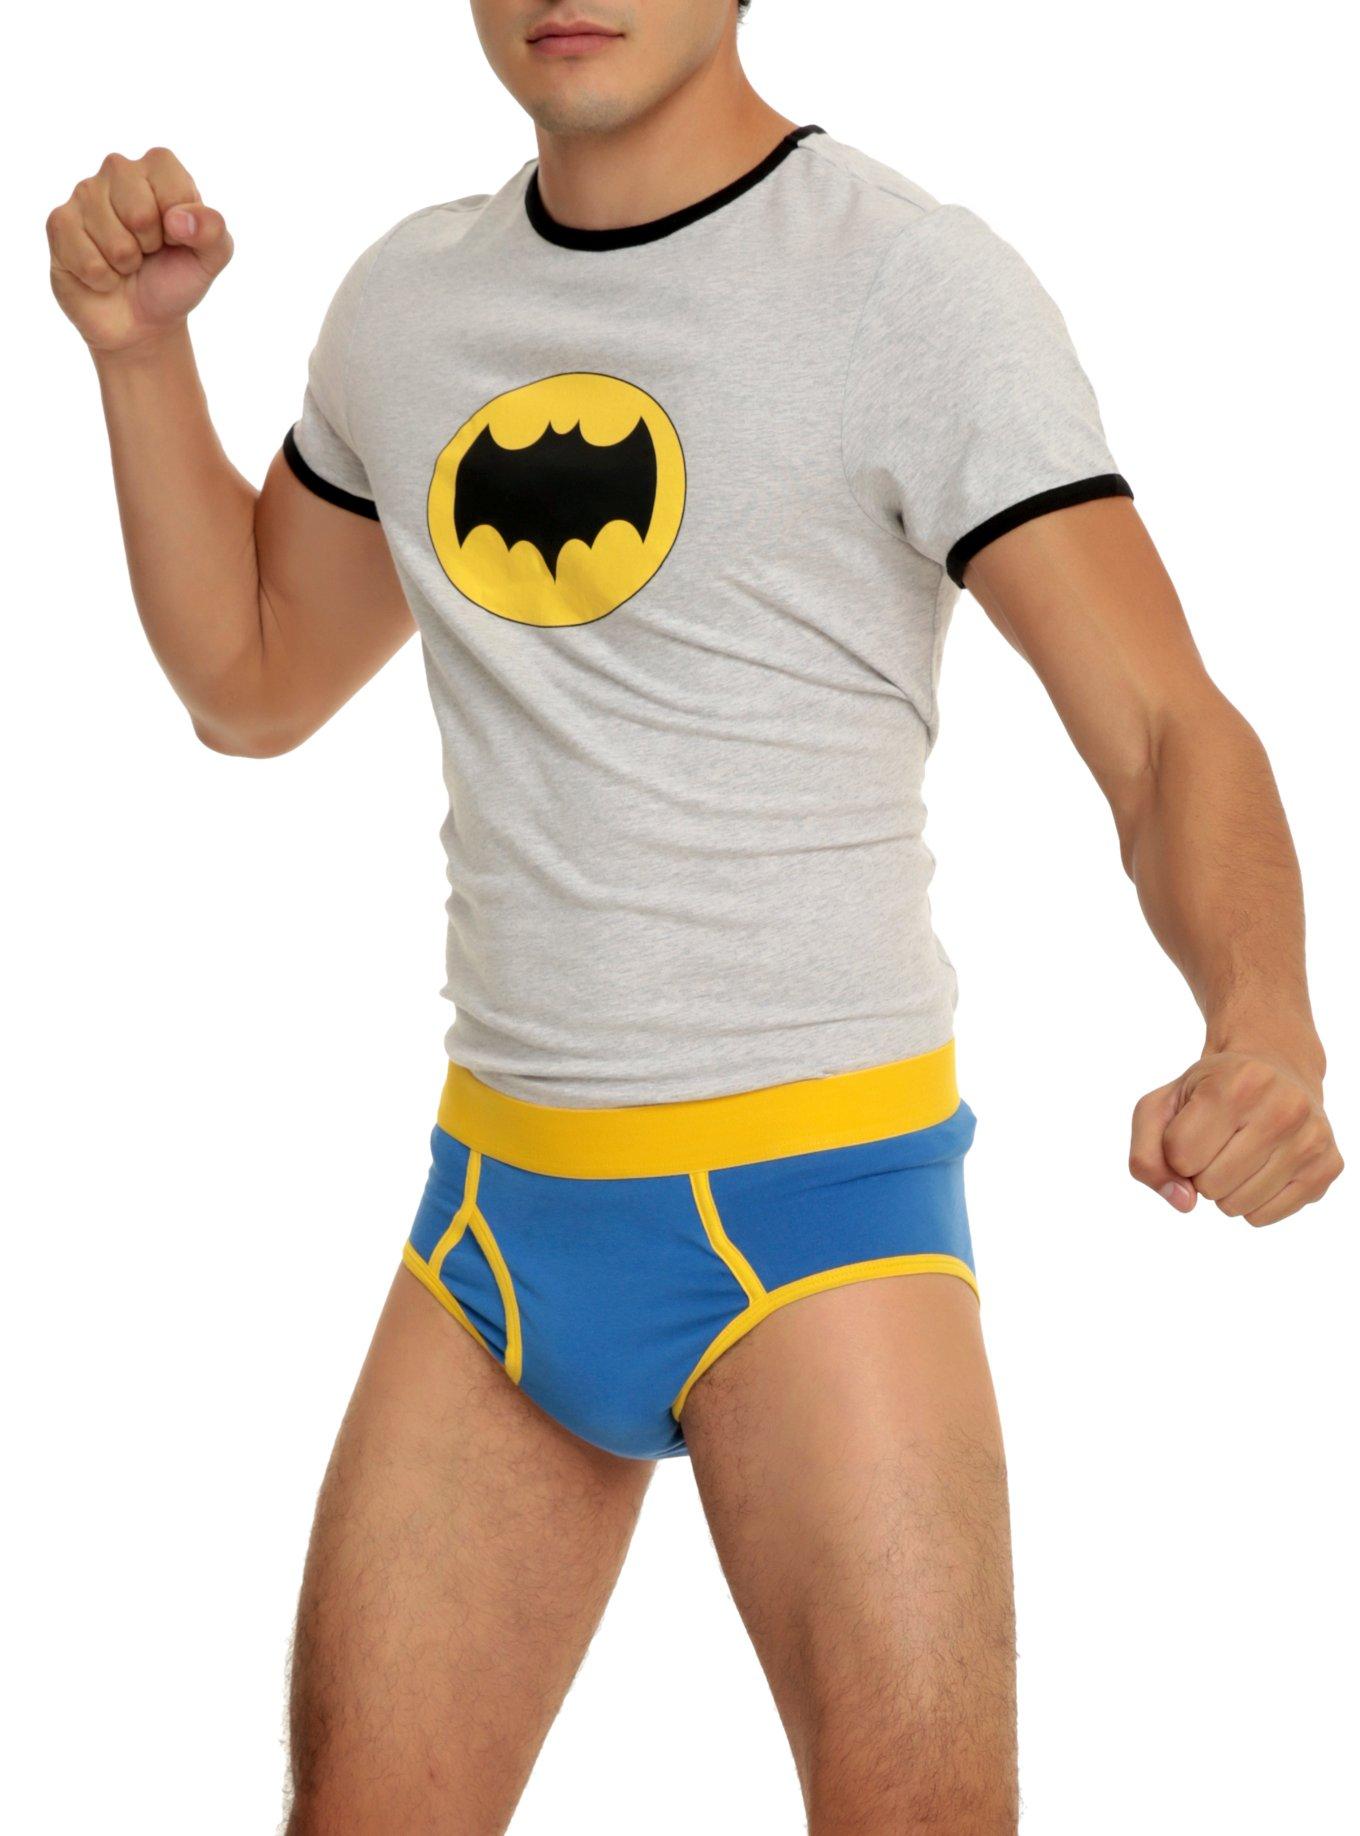 Underoos DC Comics Batman Guys Underwear Set